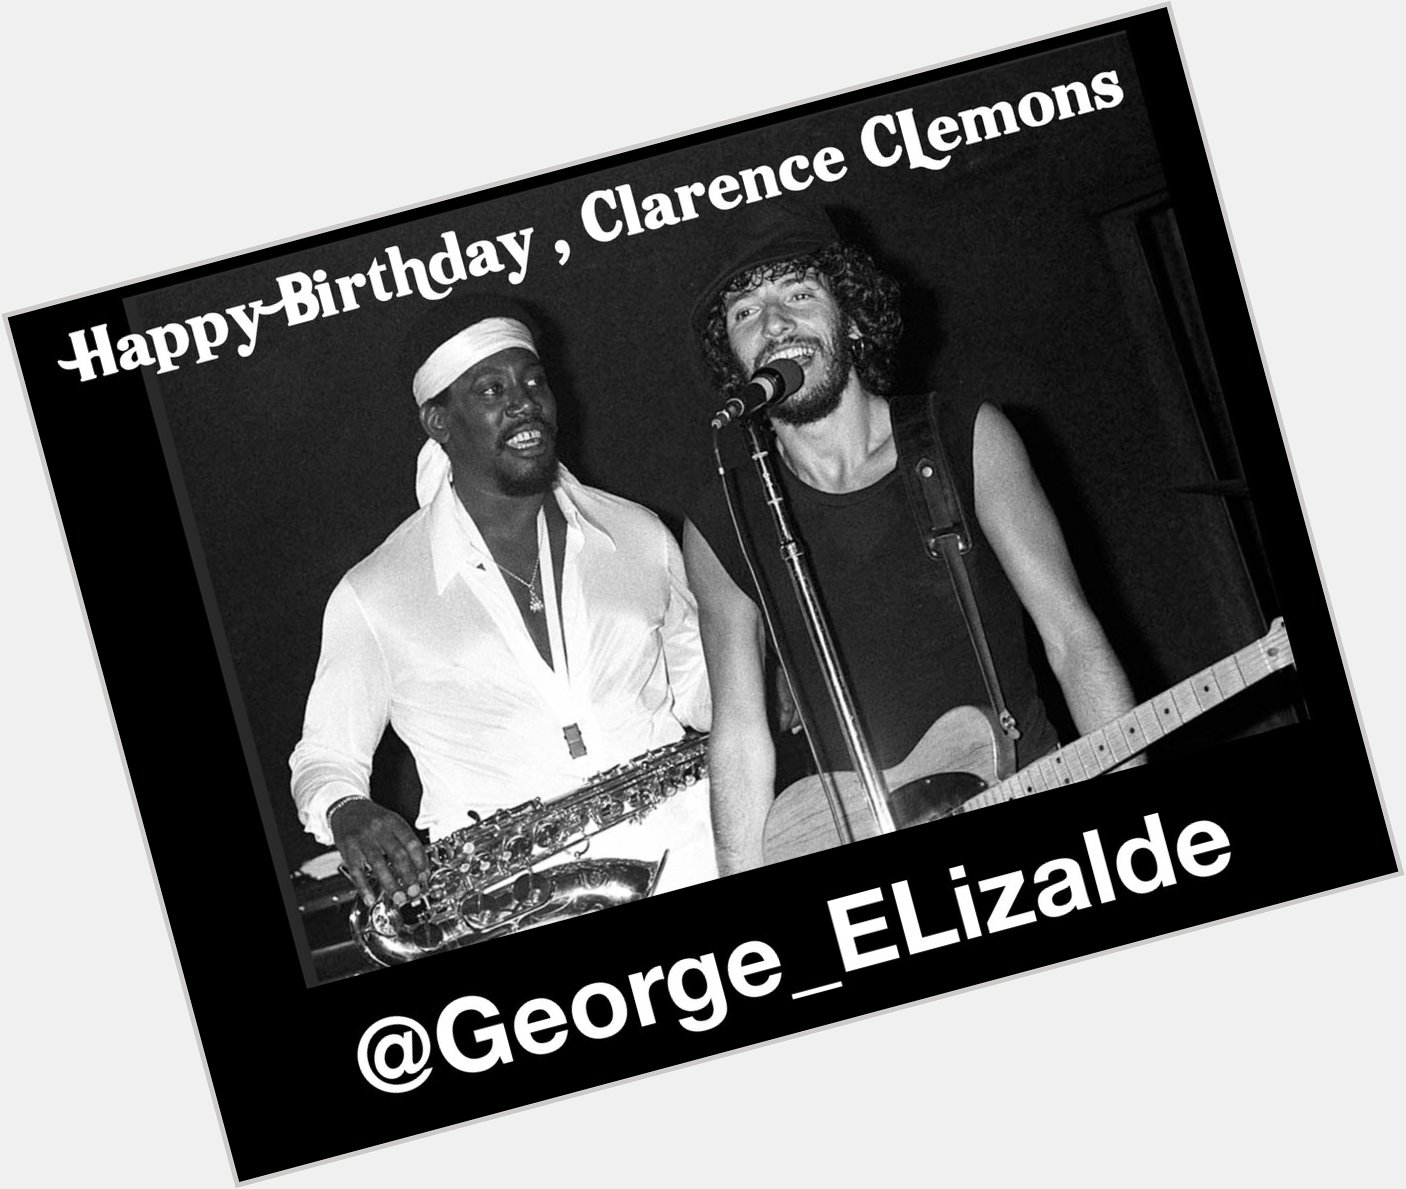  Happy Birthday, Clarence Clemons!!!  